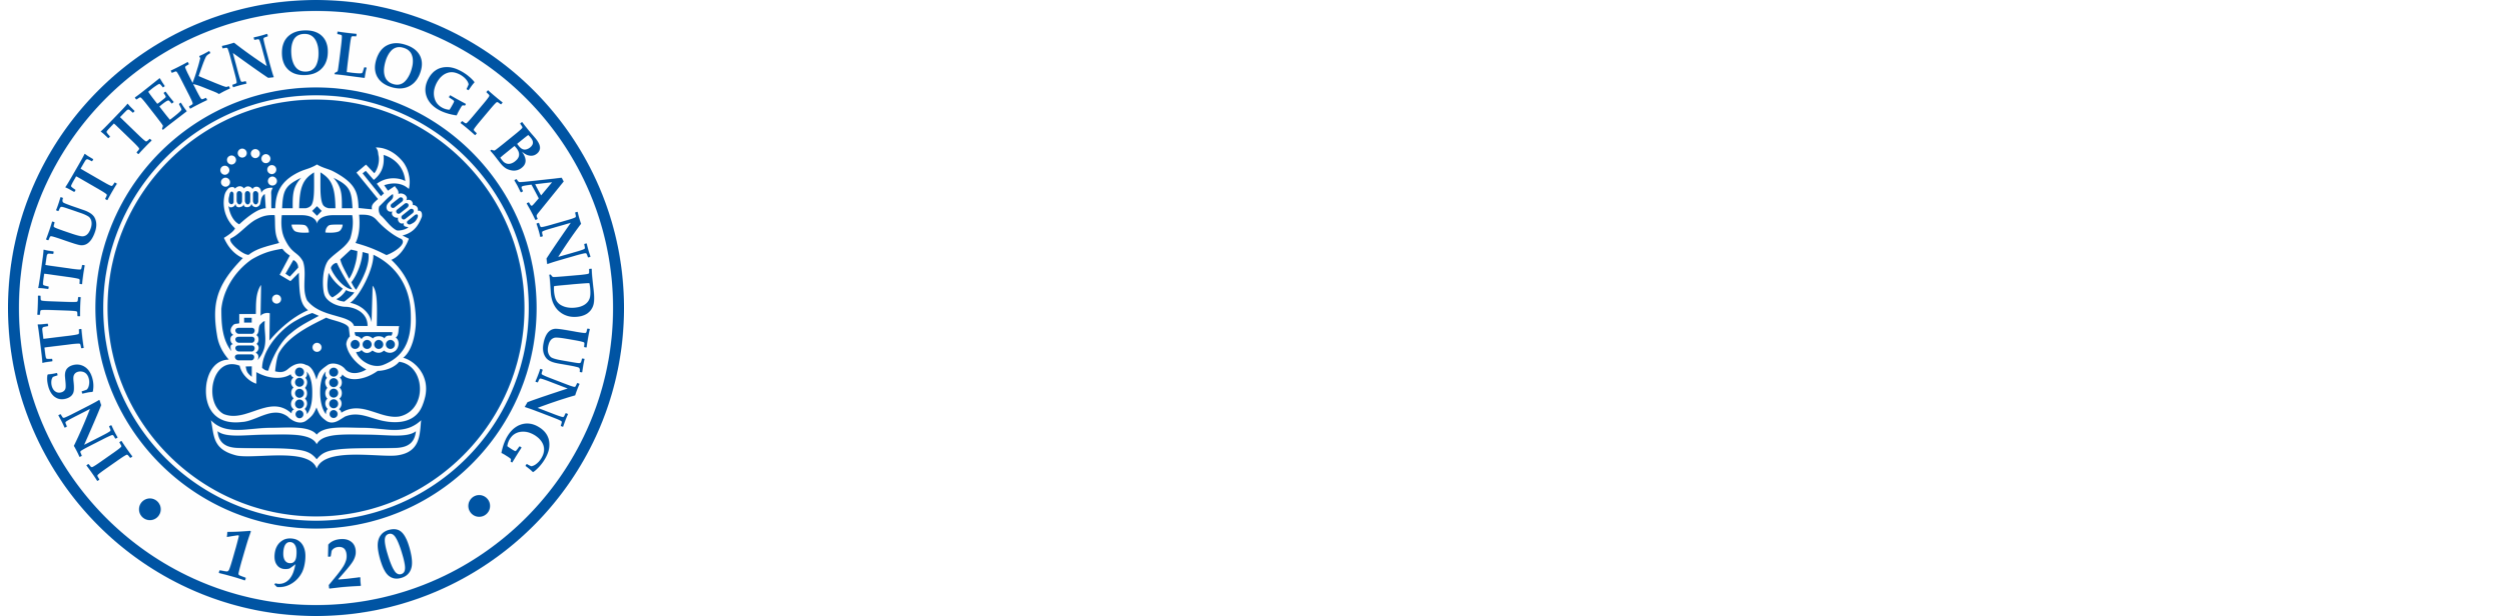 Program Magister Biomanajemen - Program Magister Biomanajemen